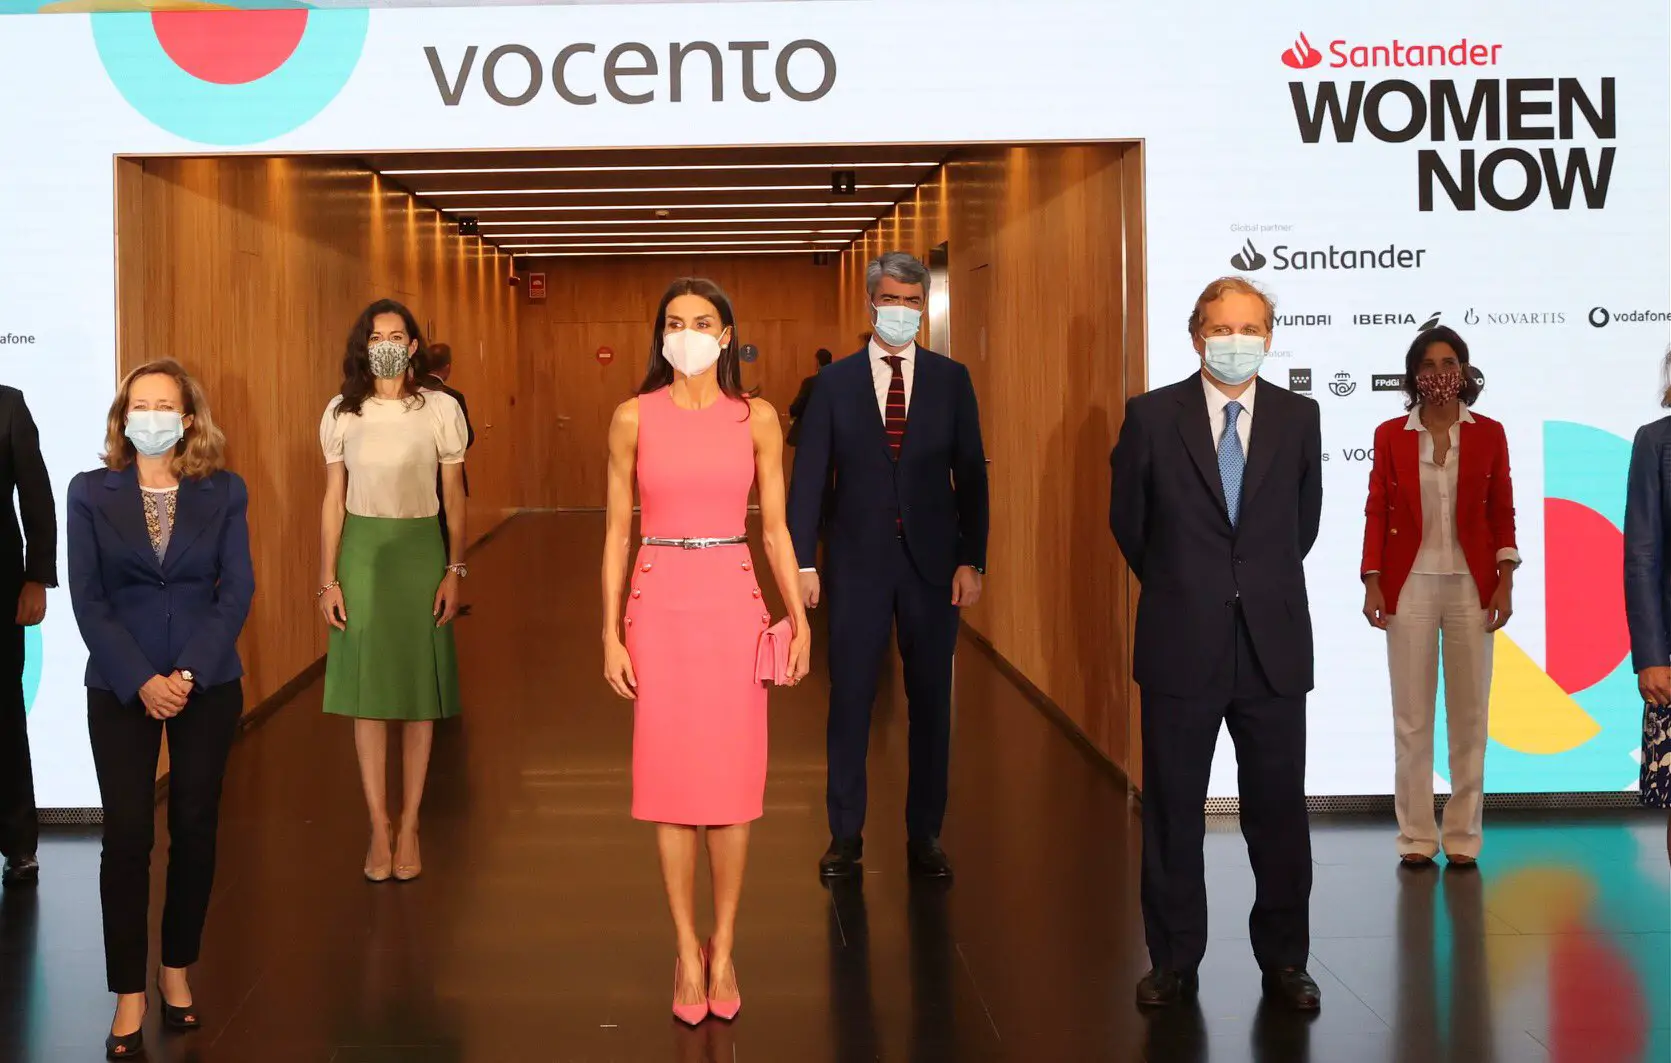 Queen Letizia attended Santander Women NOW Summit